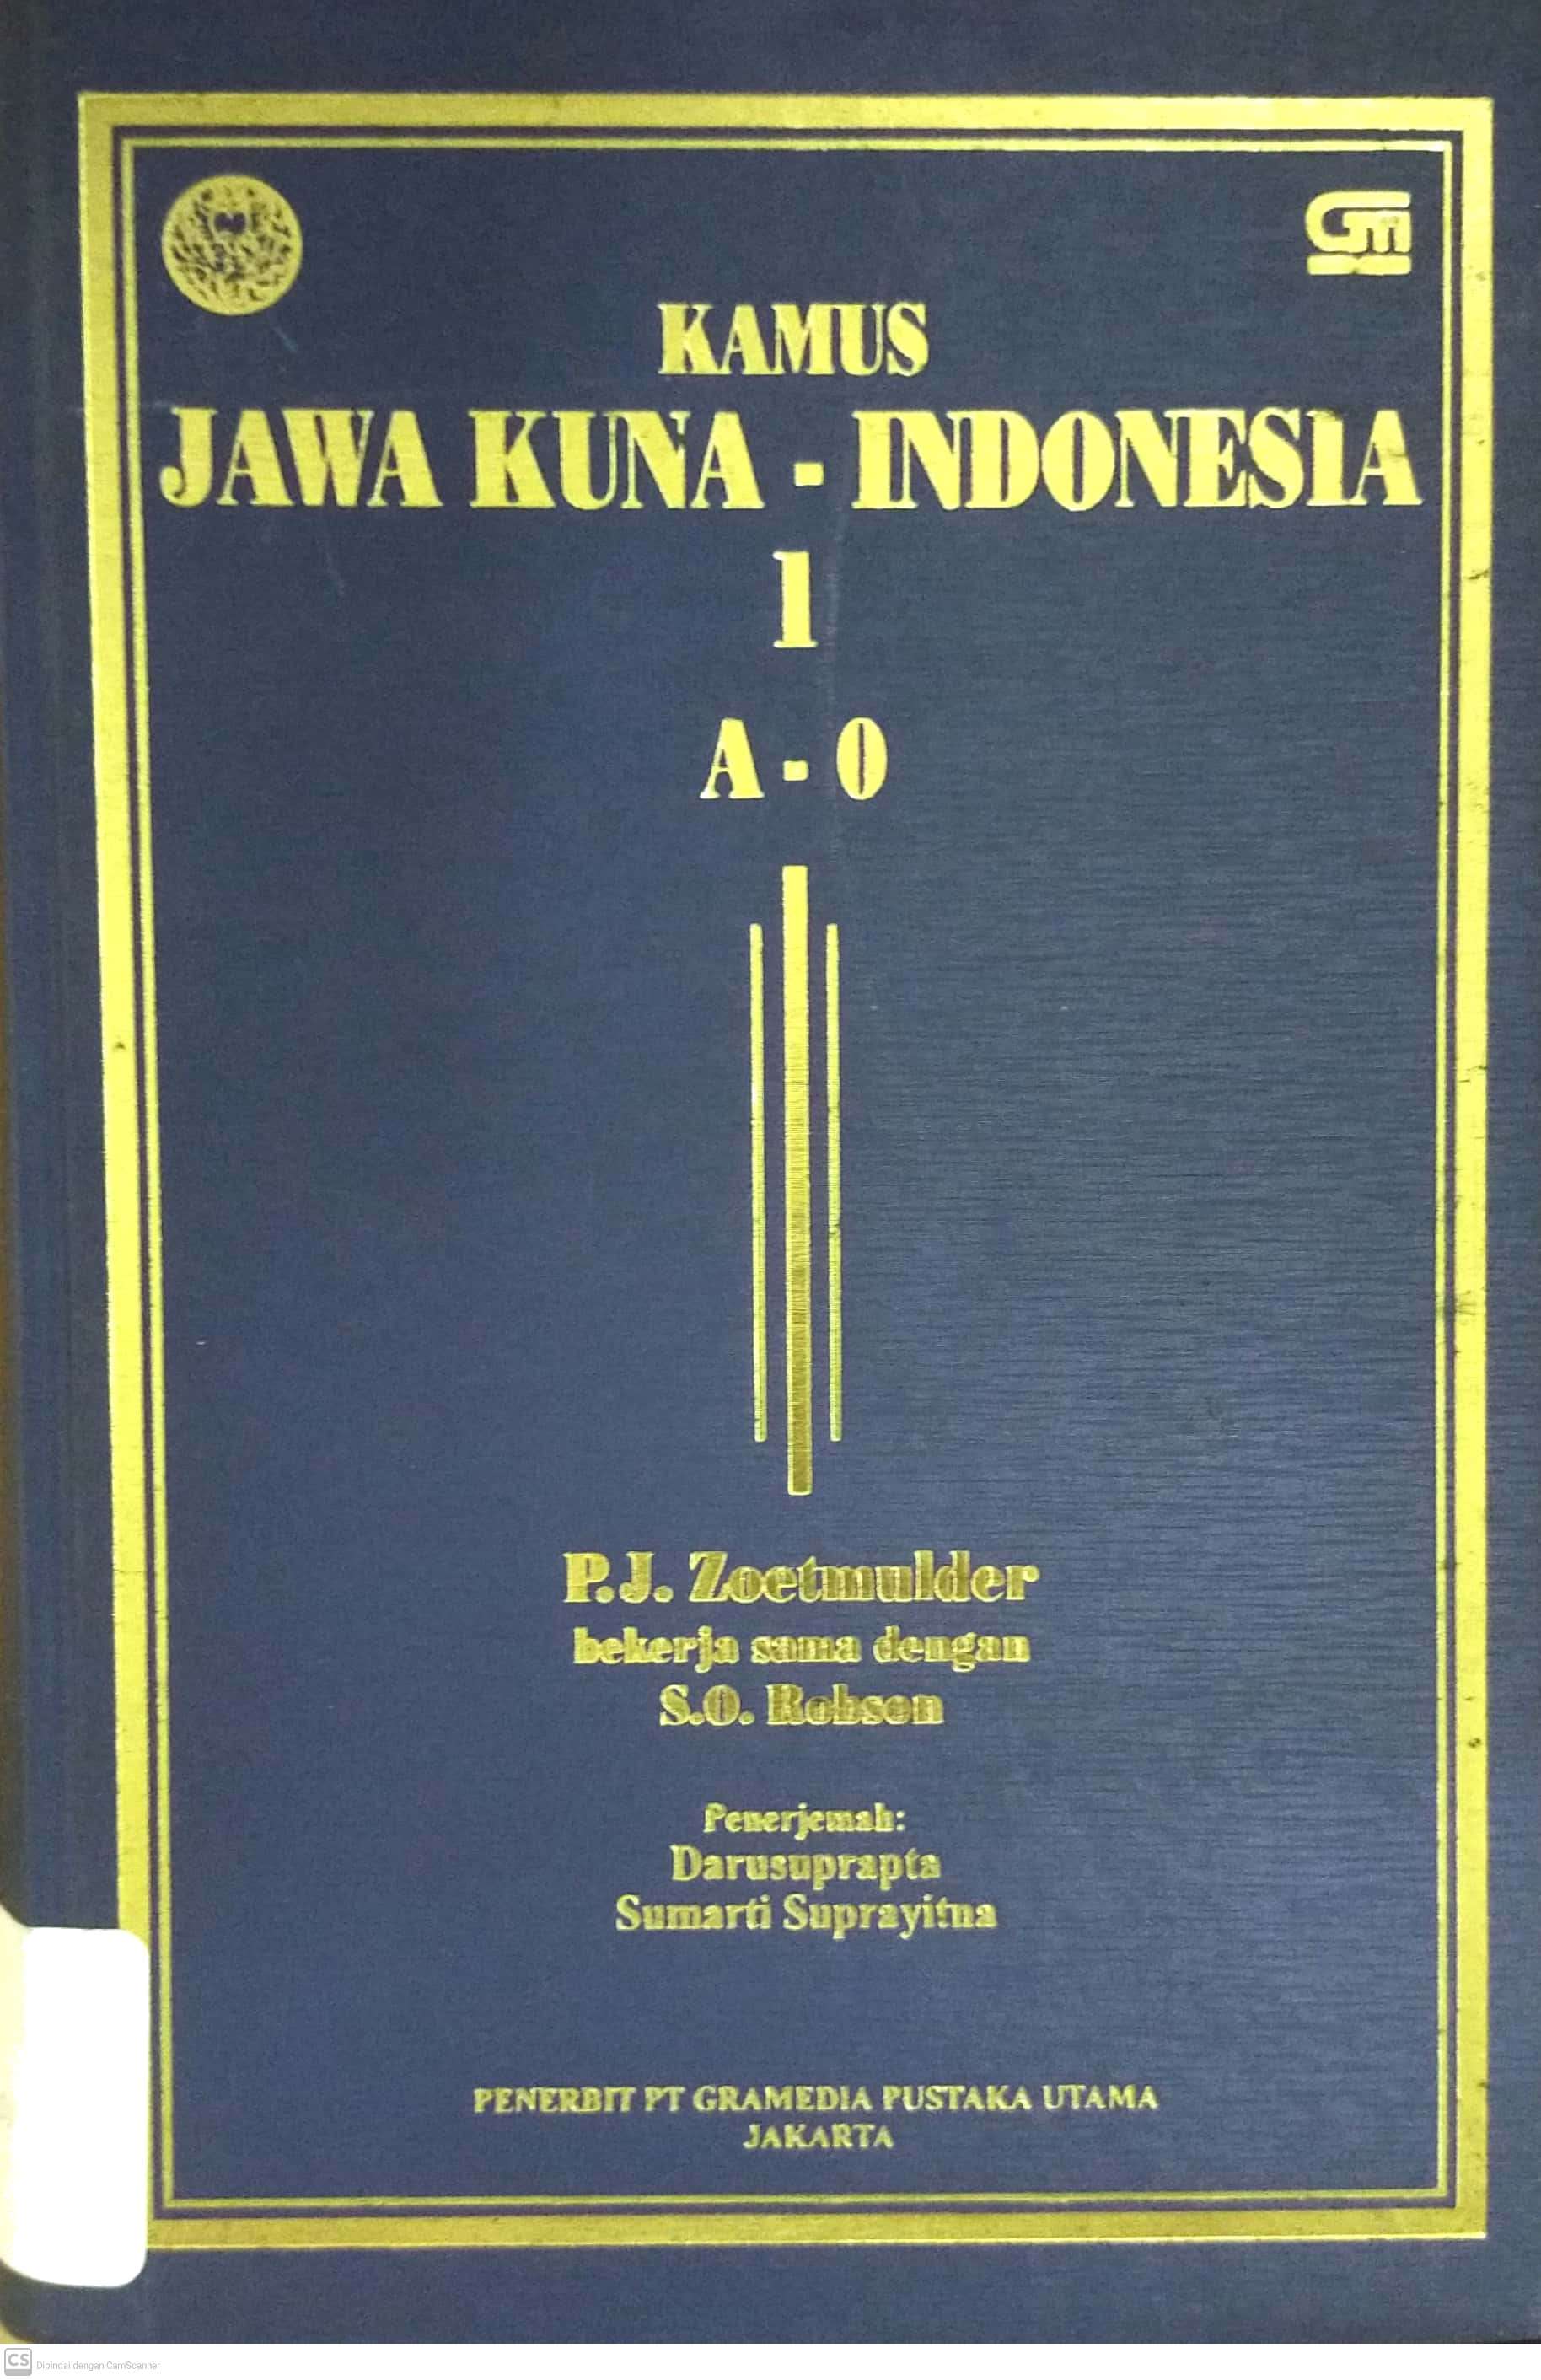 Kamus Jawa Kuna - Indonesia 1 A-O